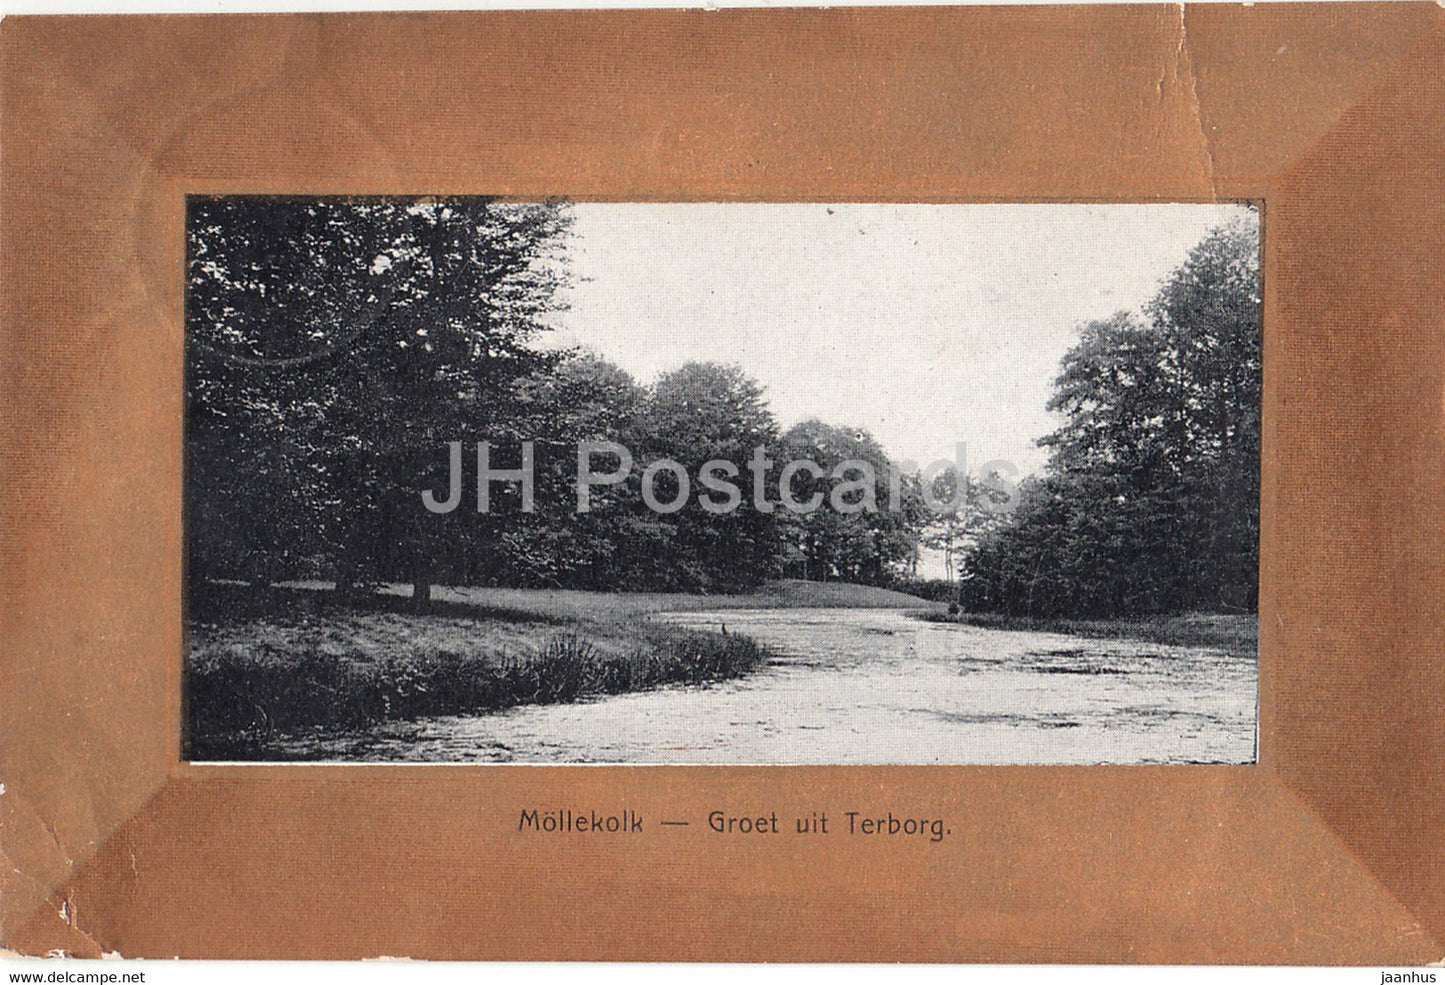 Mollekolk - Groet uit Terborg - M H Bruins - old postcard - 1908 - Netherlands - used - JH Postcards